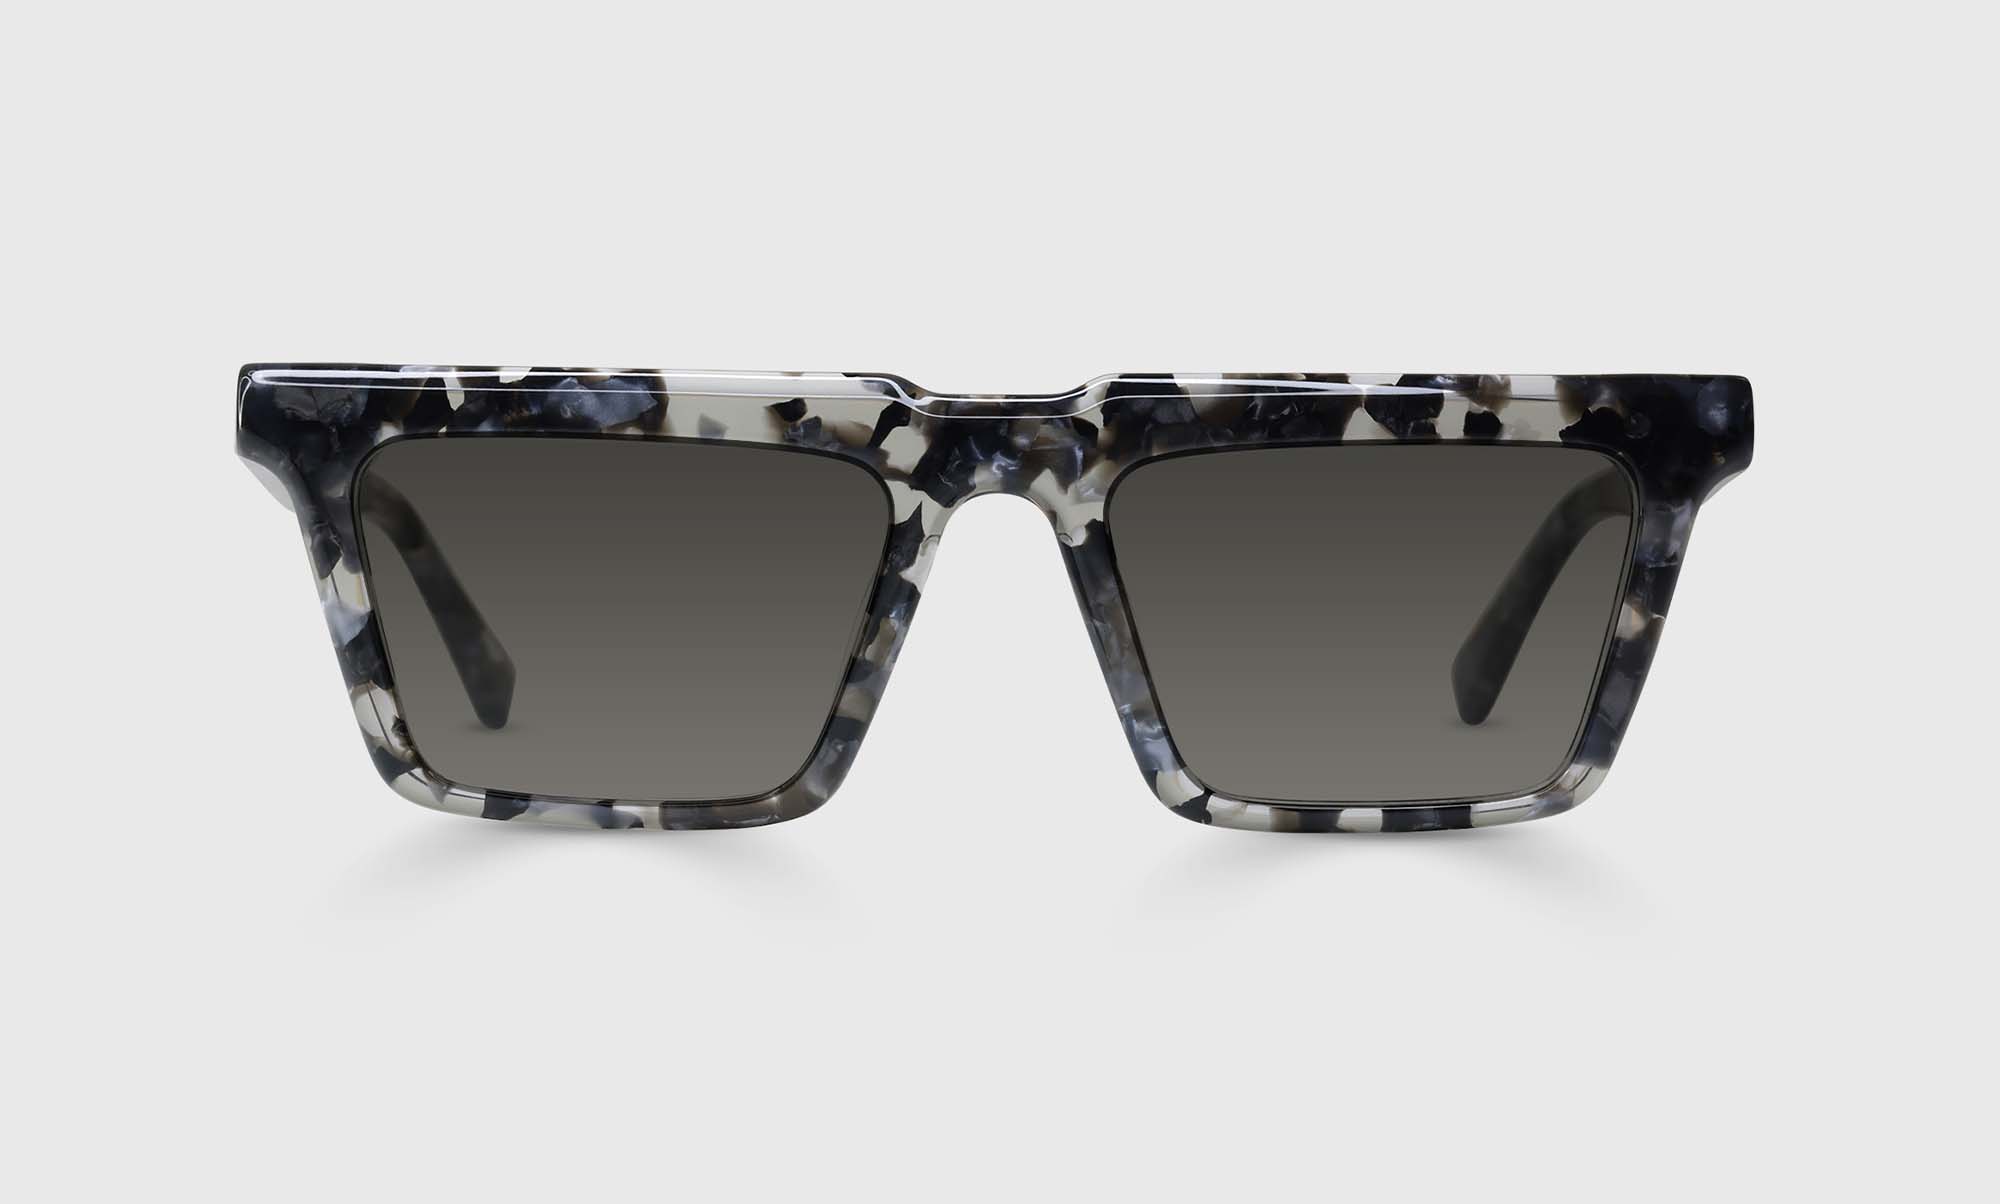 00-pg | eyebobs Guy Normis, Square, Wide, Bifocal Reader Sunglasses, Polarized Grey Sunglasses